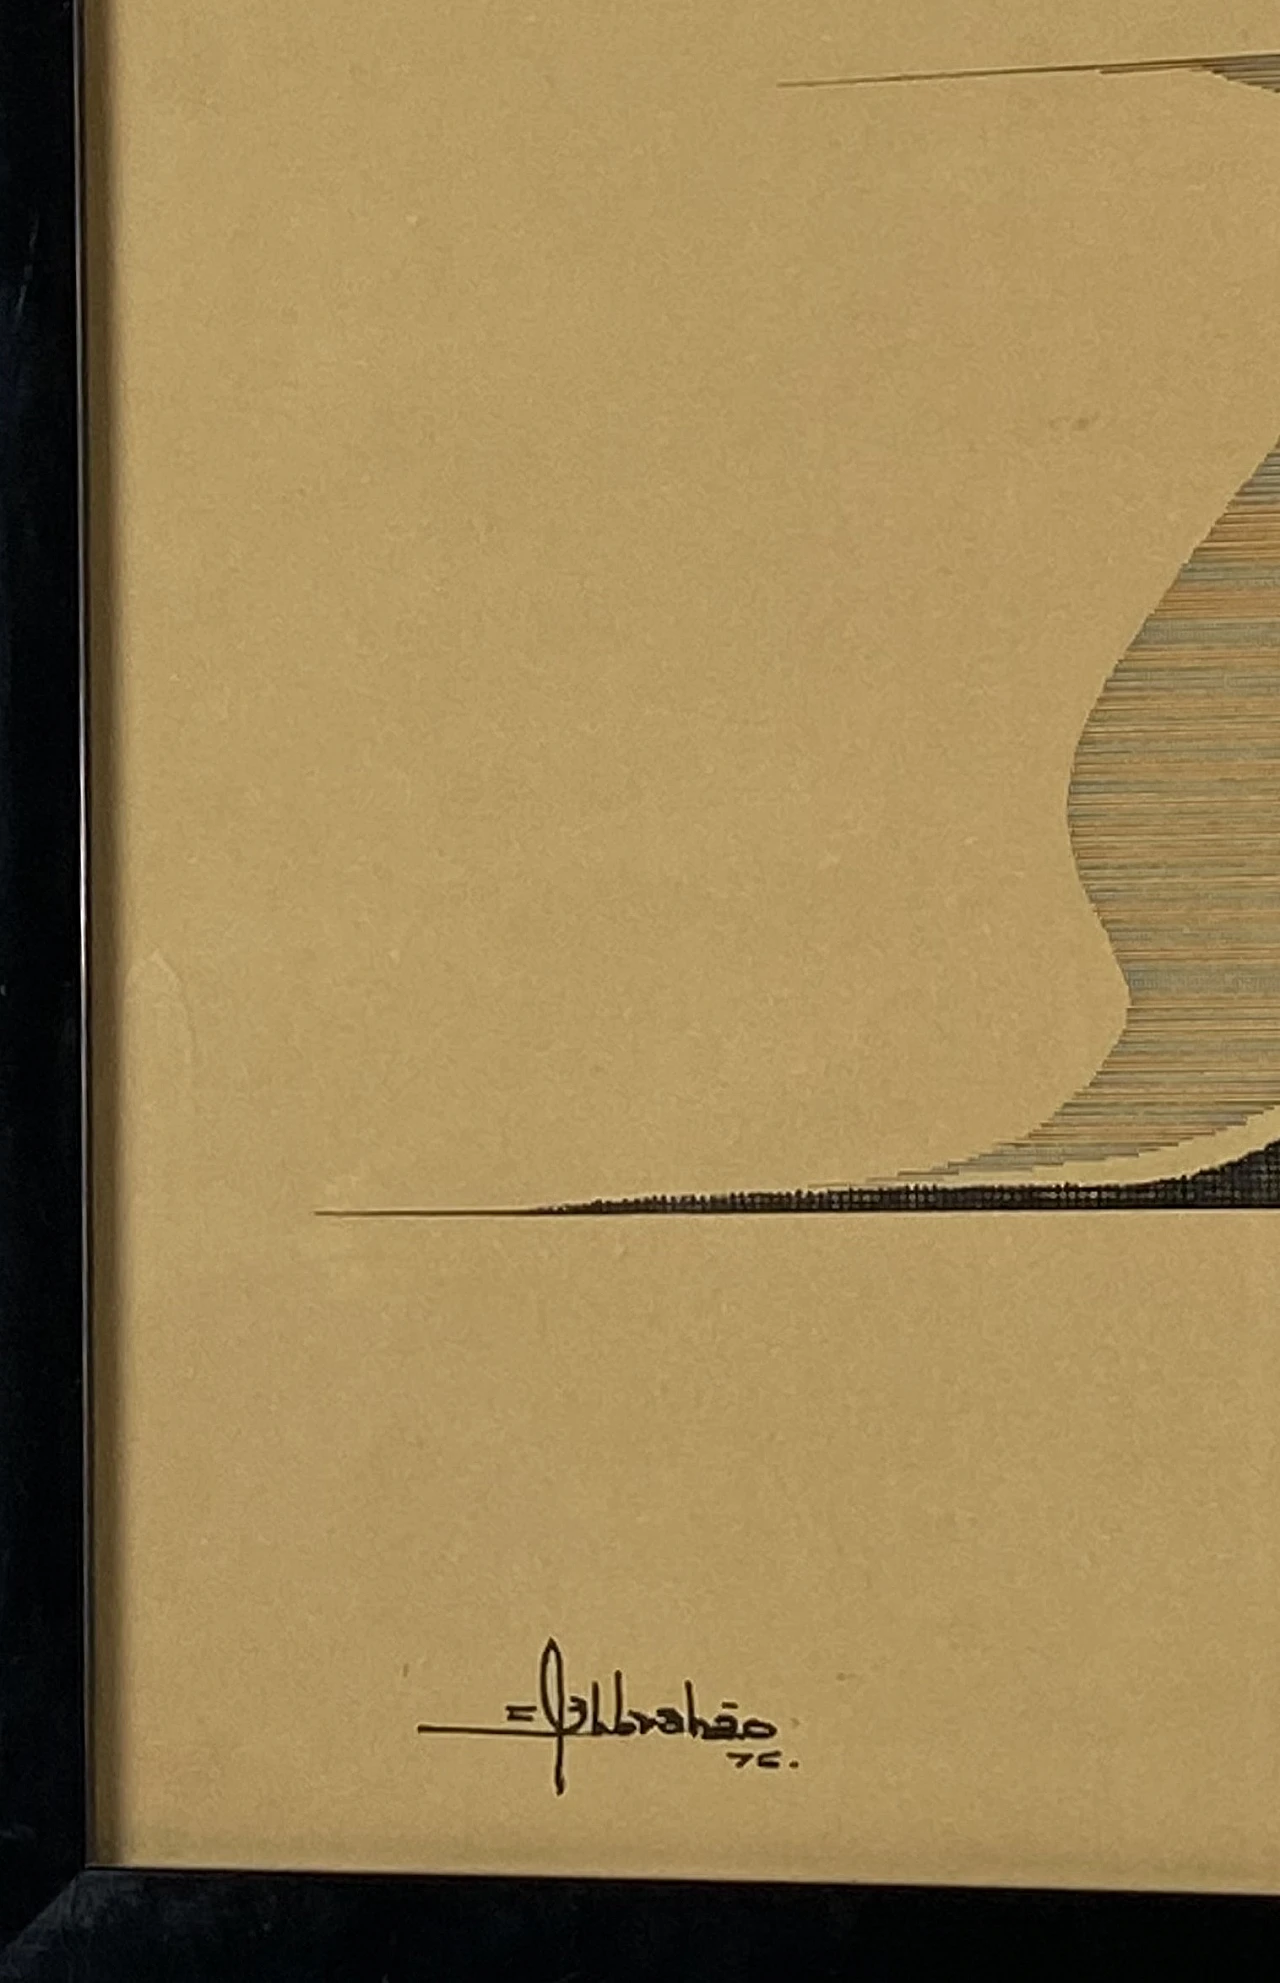 Abbahao, Pesce, disegno a china su carta, 1976 17